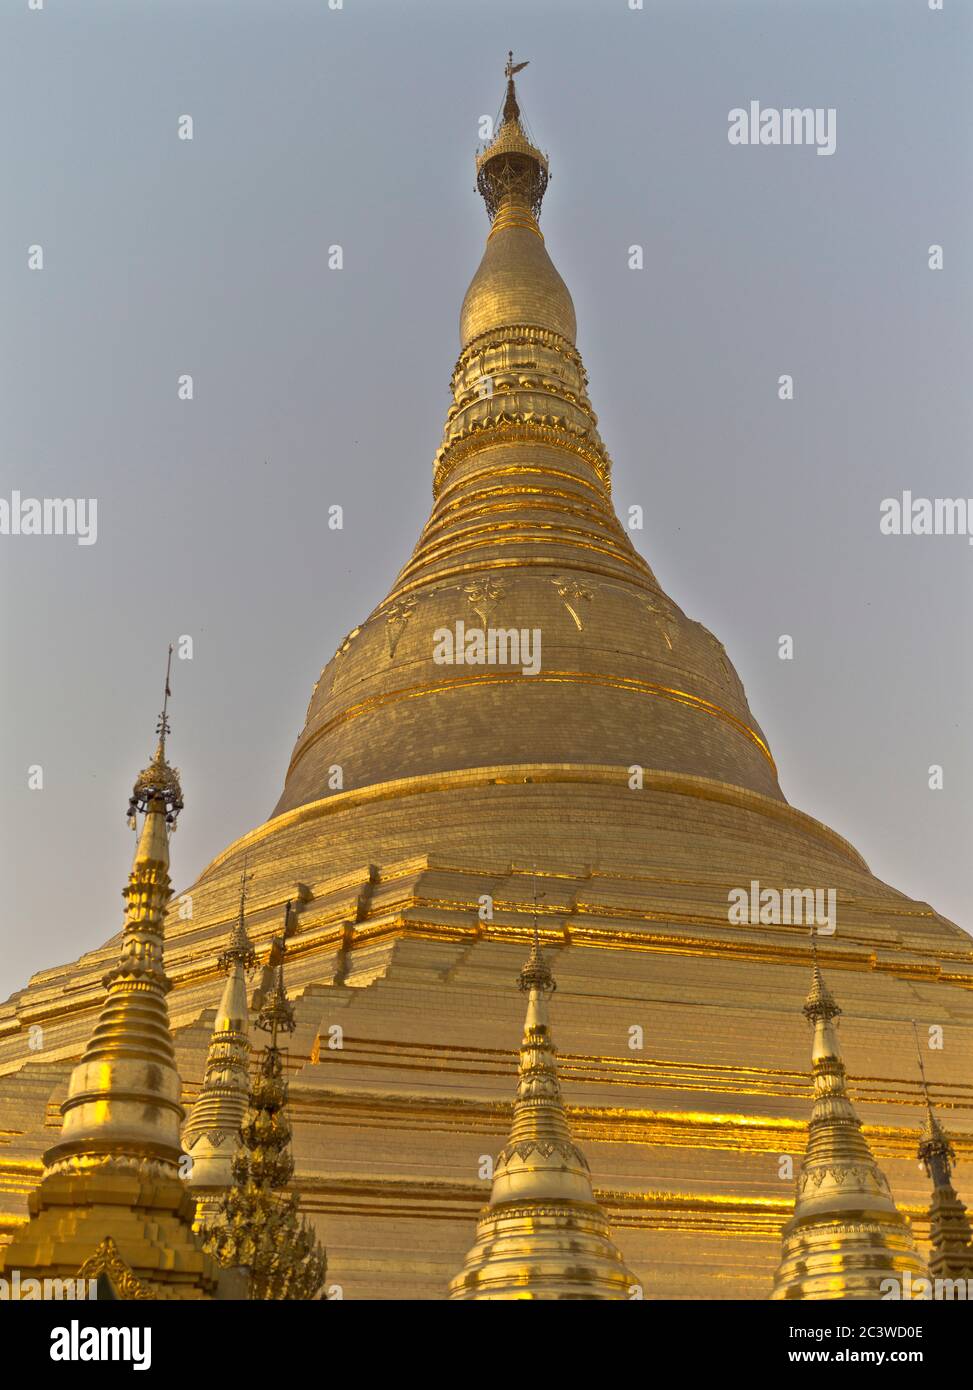 dh Shwedagon Pagoda templo YANGON MYANMAR templos budistas Gran Dagón Zedi Daw estupa dorada Hoja de oro birmano Foto de stock